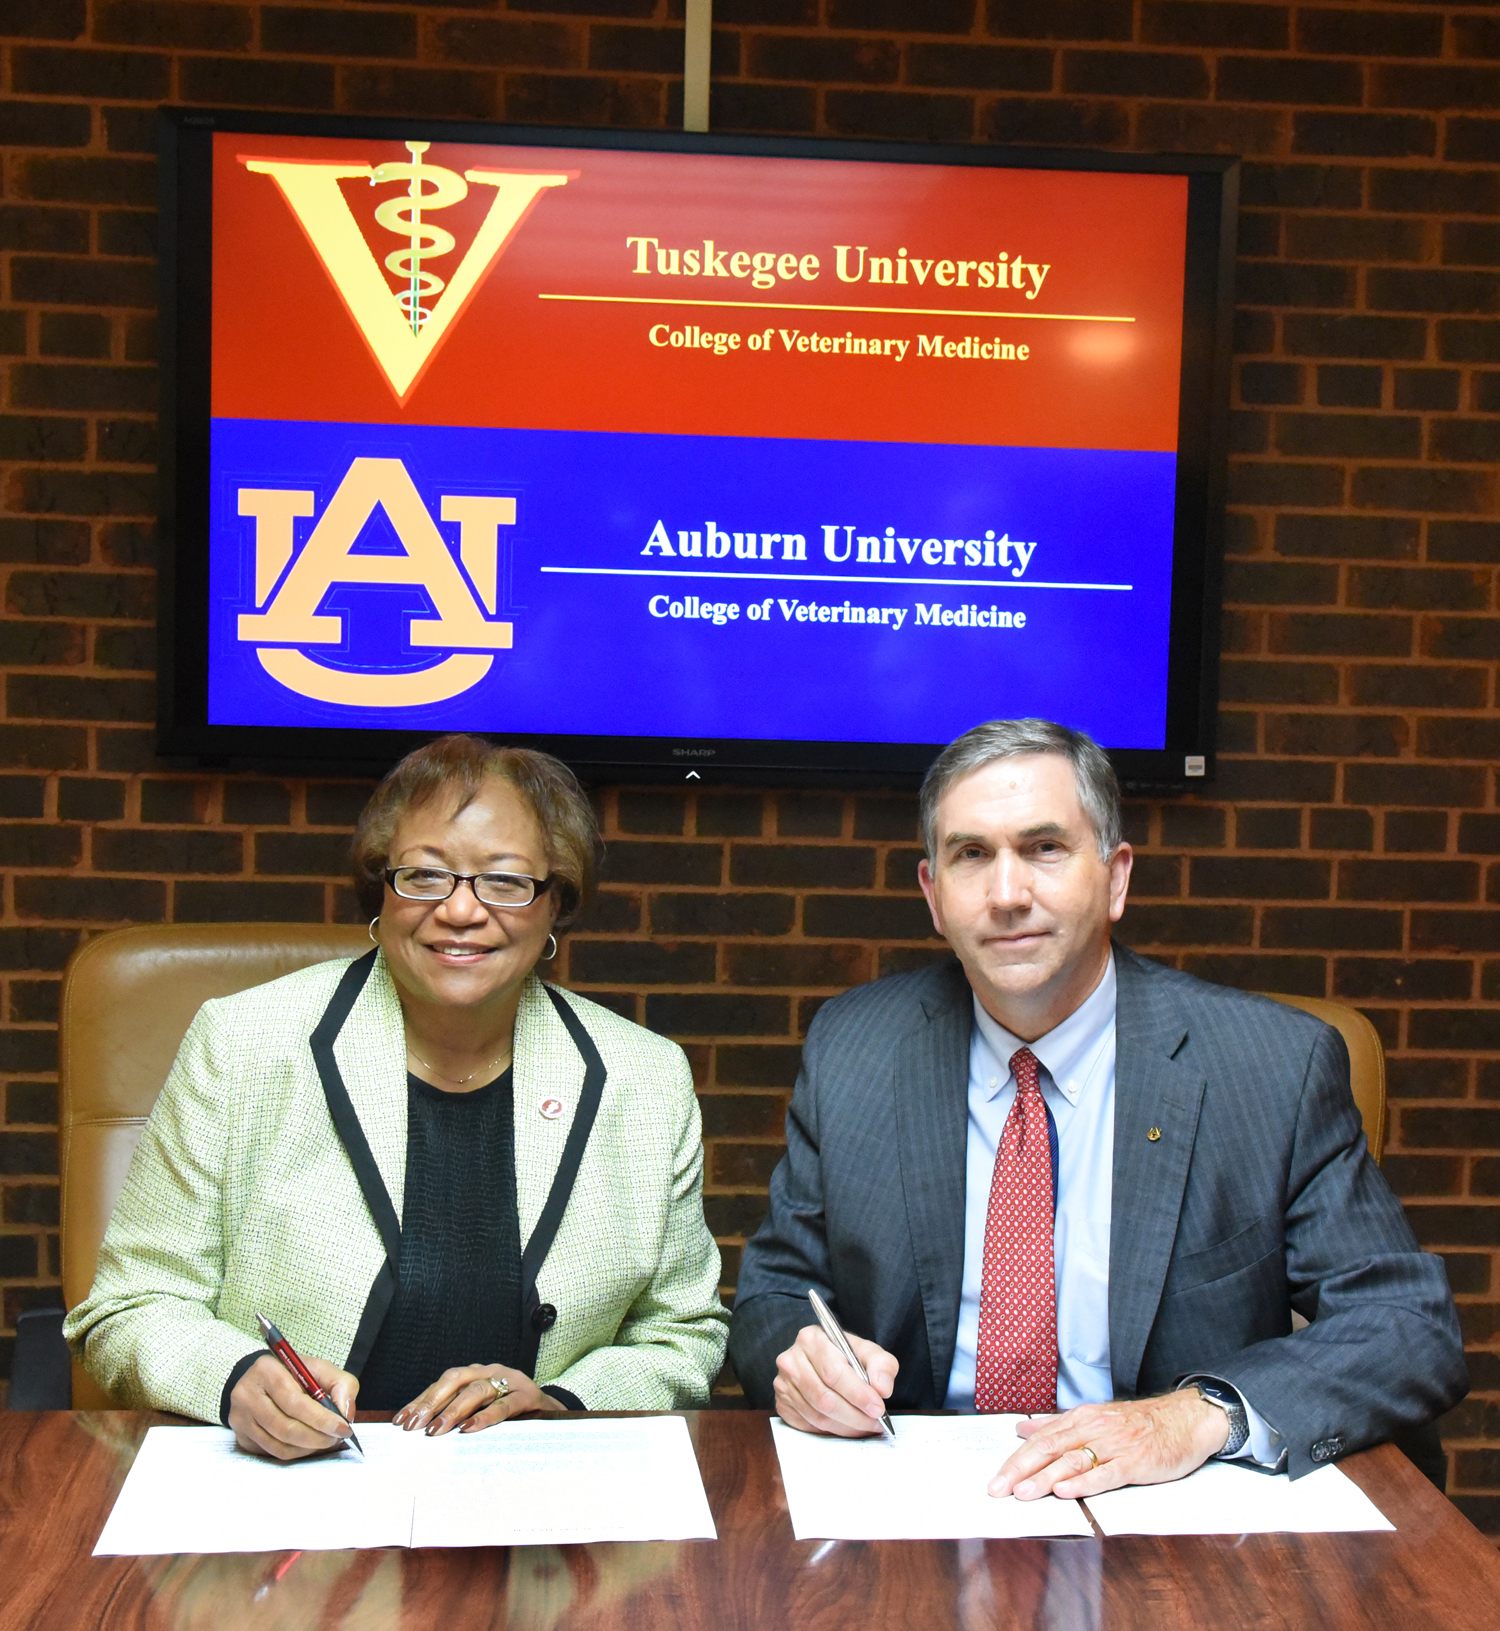 Tuskegee veterinary Dean Ruby Perry, and Auburn veterinary Dean Calvin Johnson sign the agreement.